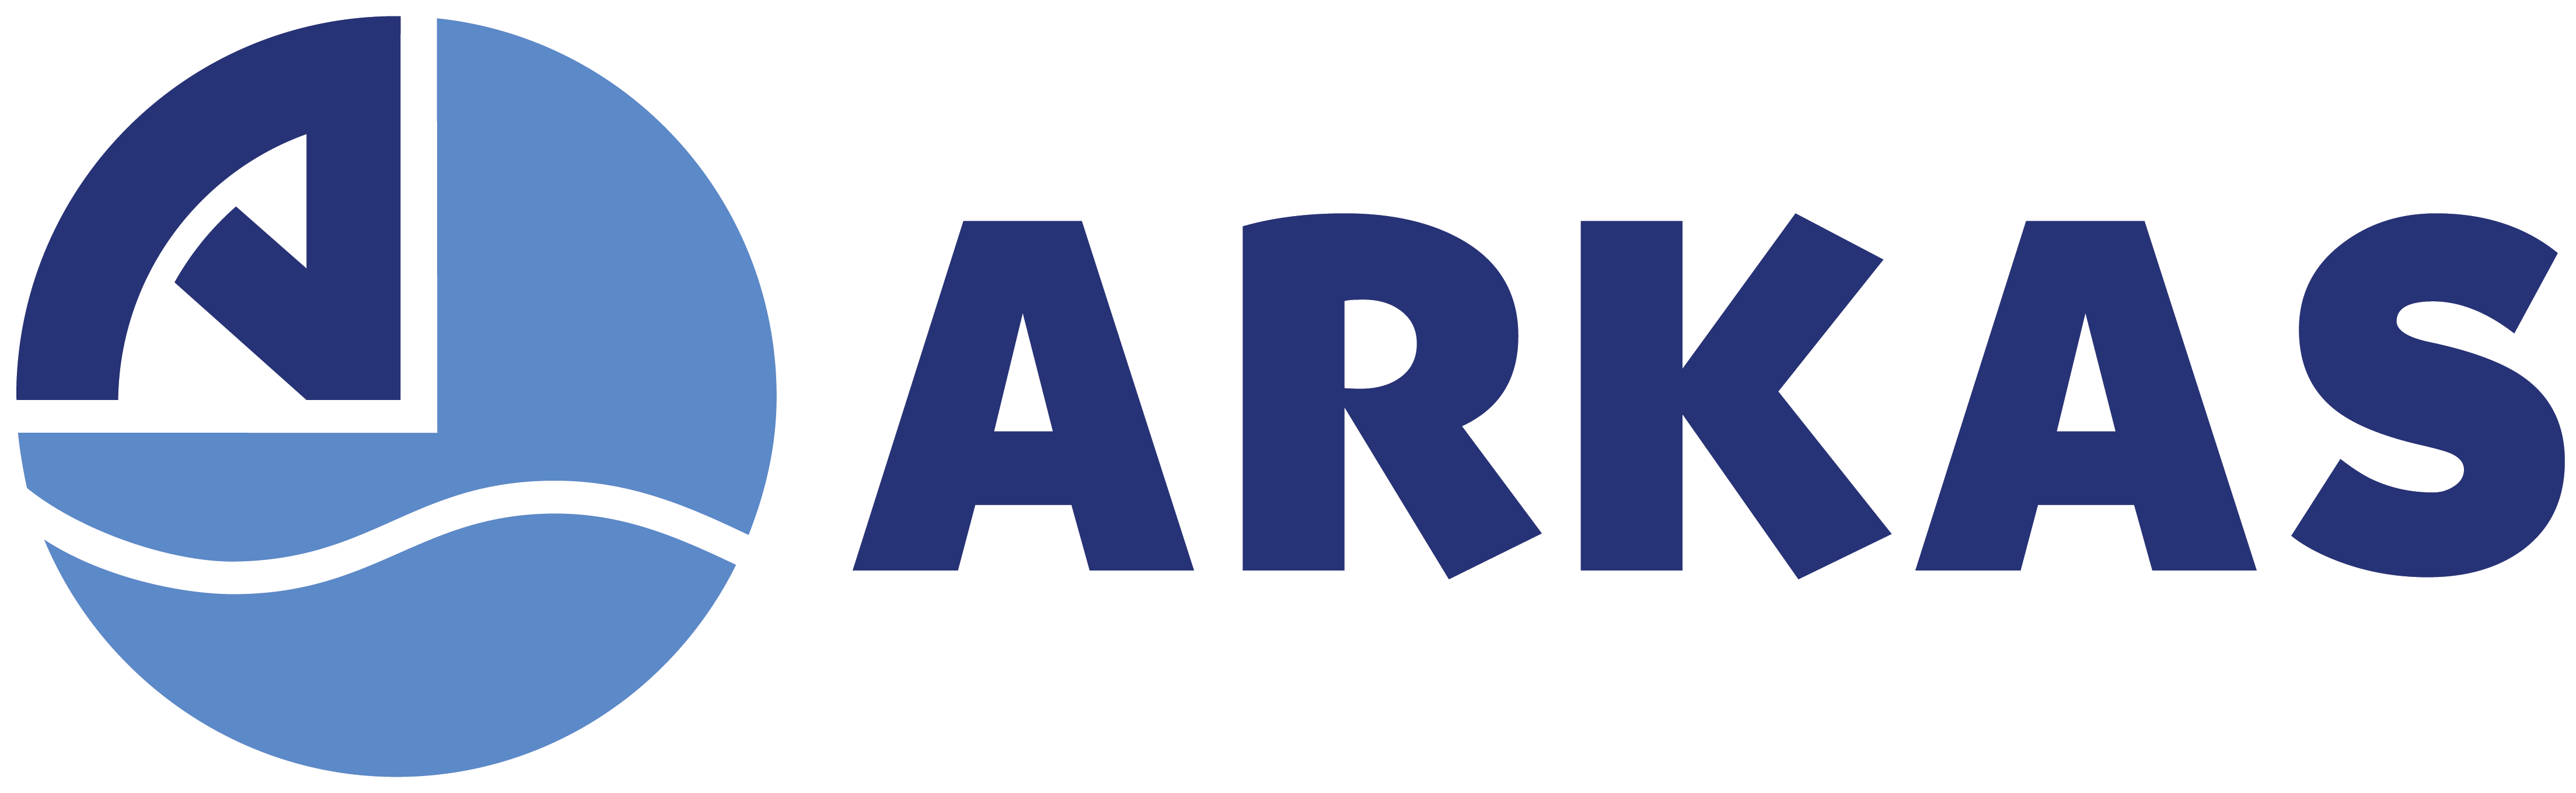 arkas-logo